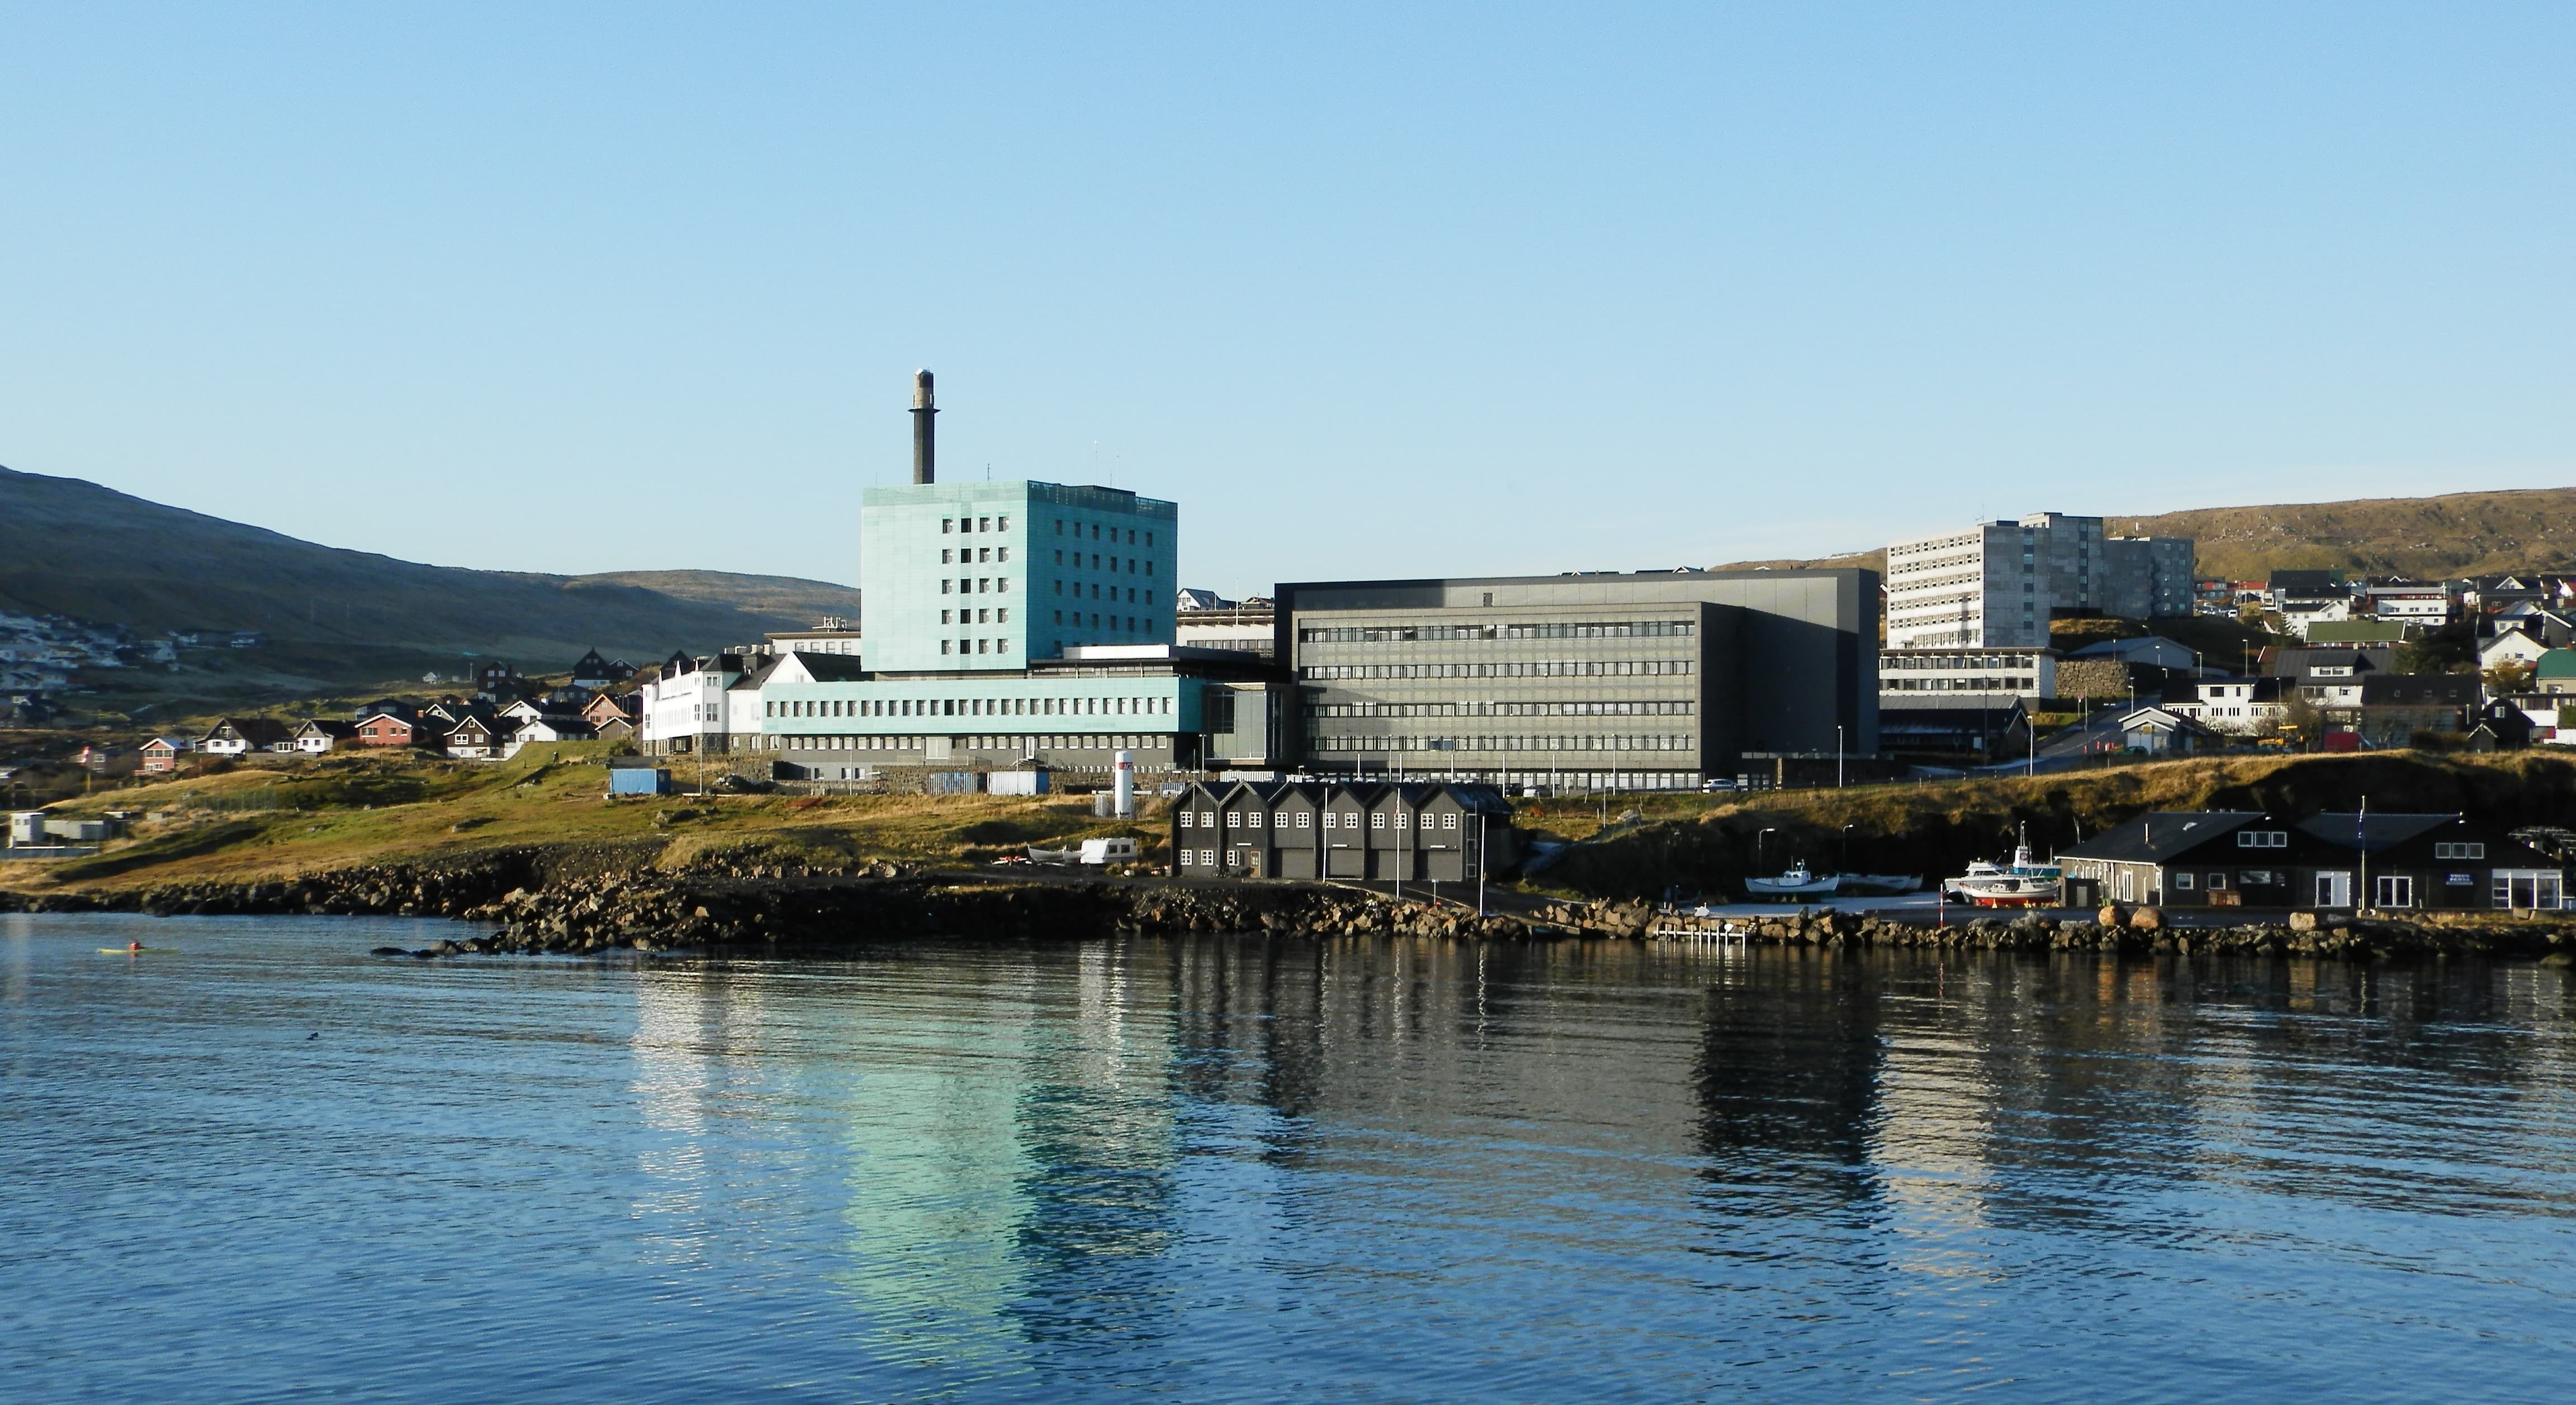 Landssjúkrahúsið Tórshavn 2012 lille min